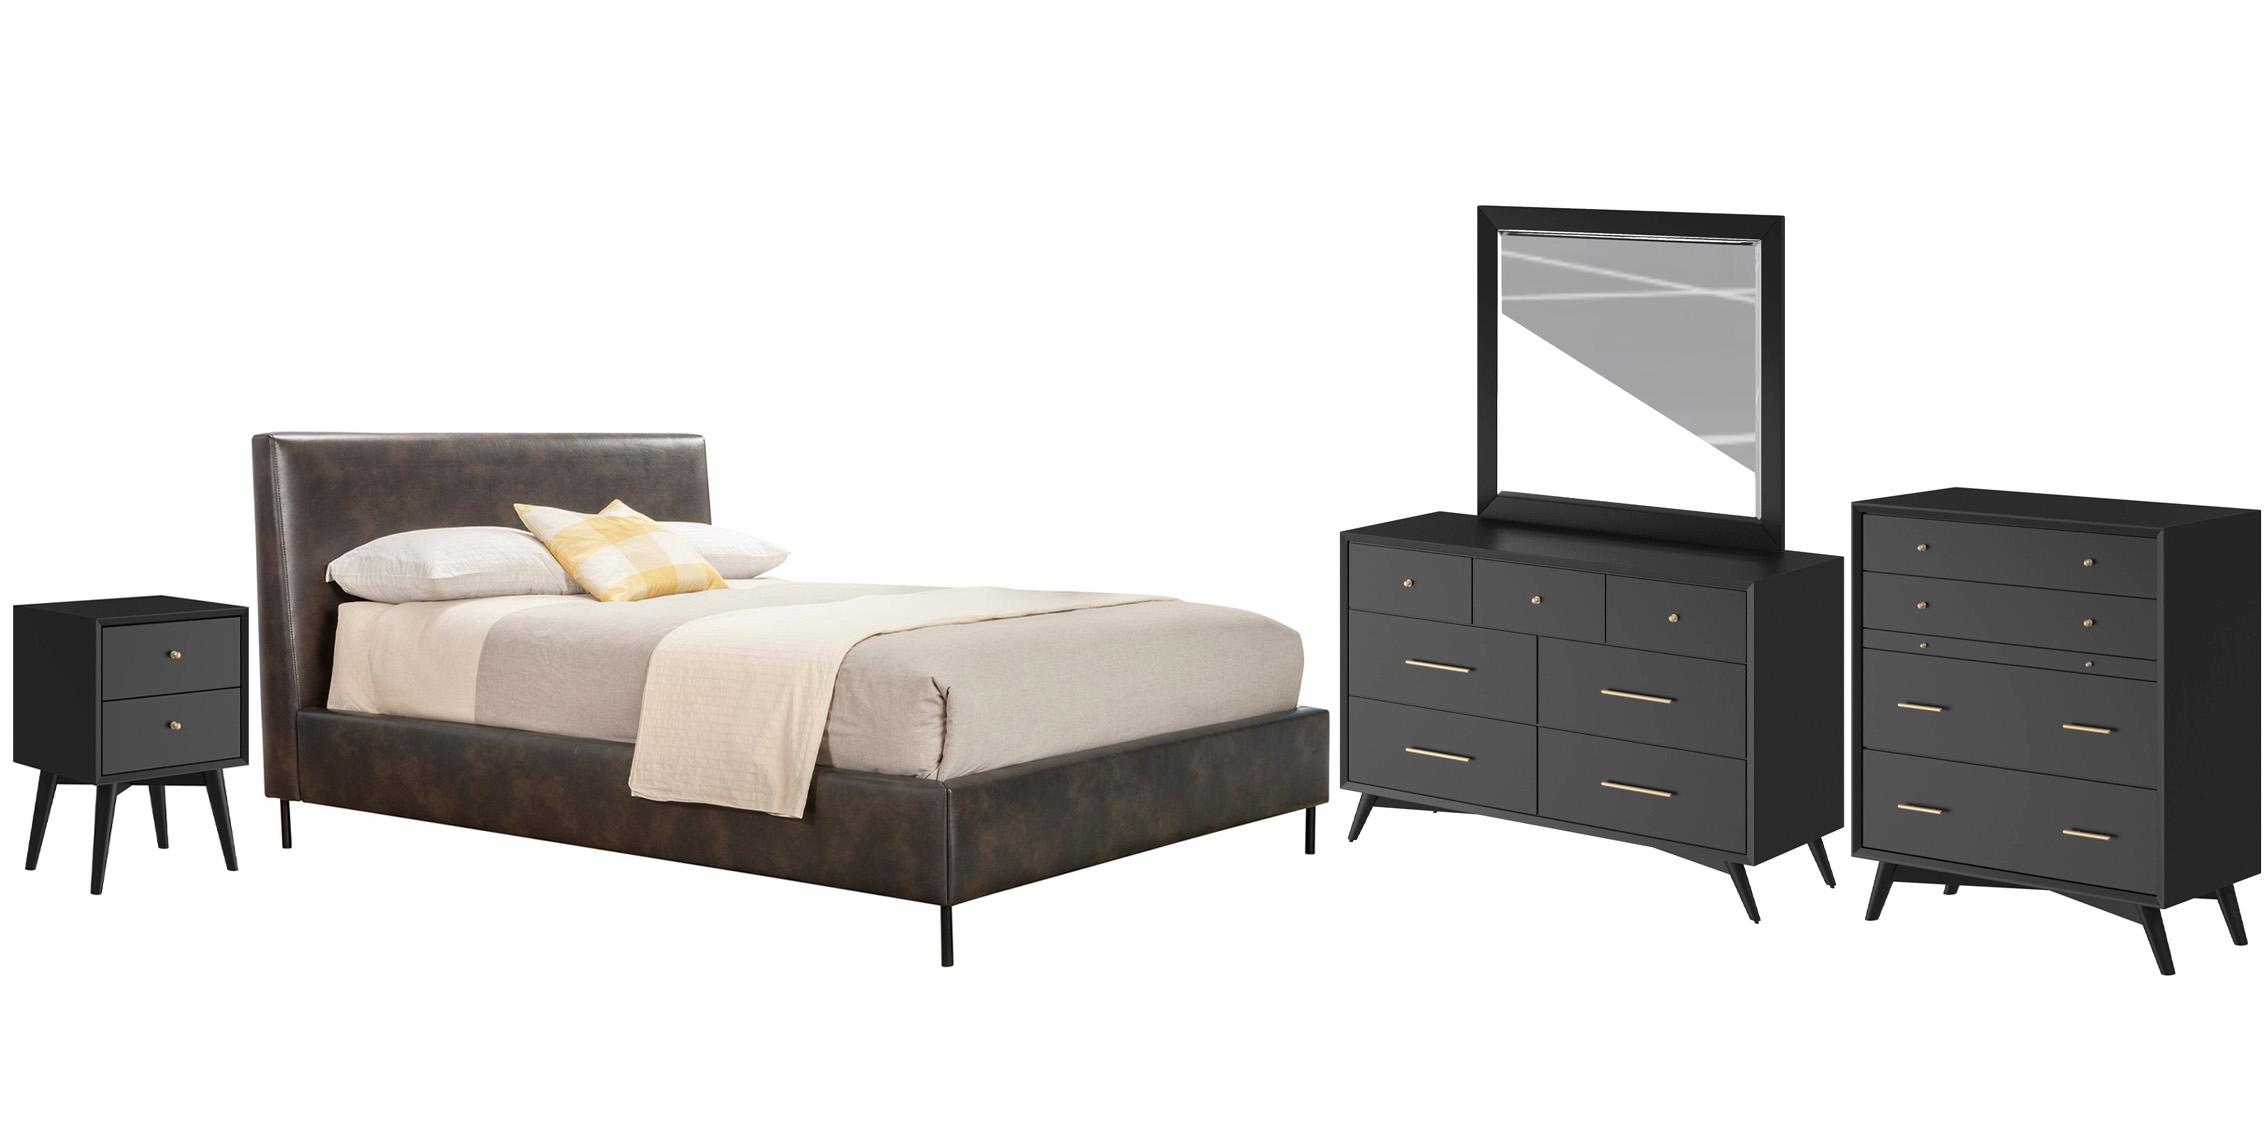 Modern Platform Bedroom Set SOPHIA  / FLYNN 6902EK-GRY-Set-5-BLK in Gray, Black Faux Leather